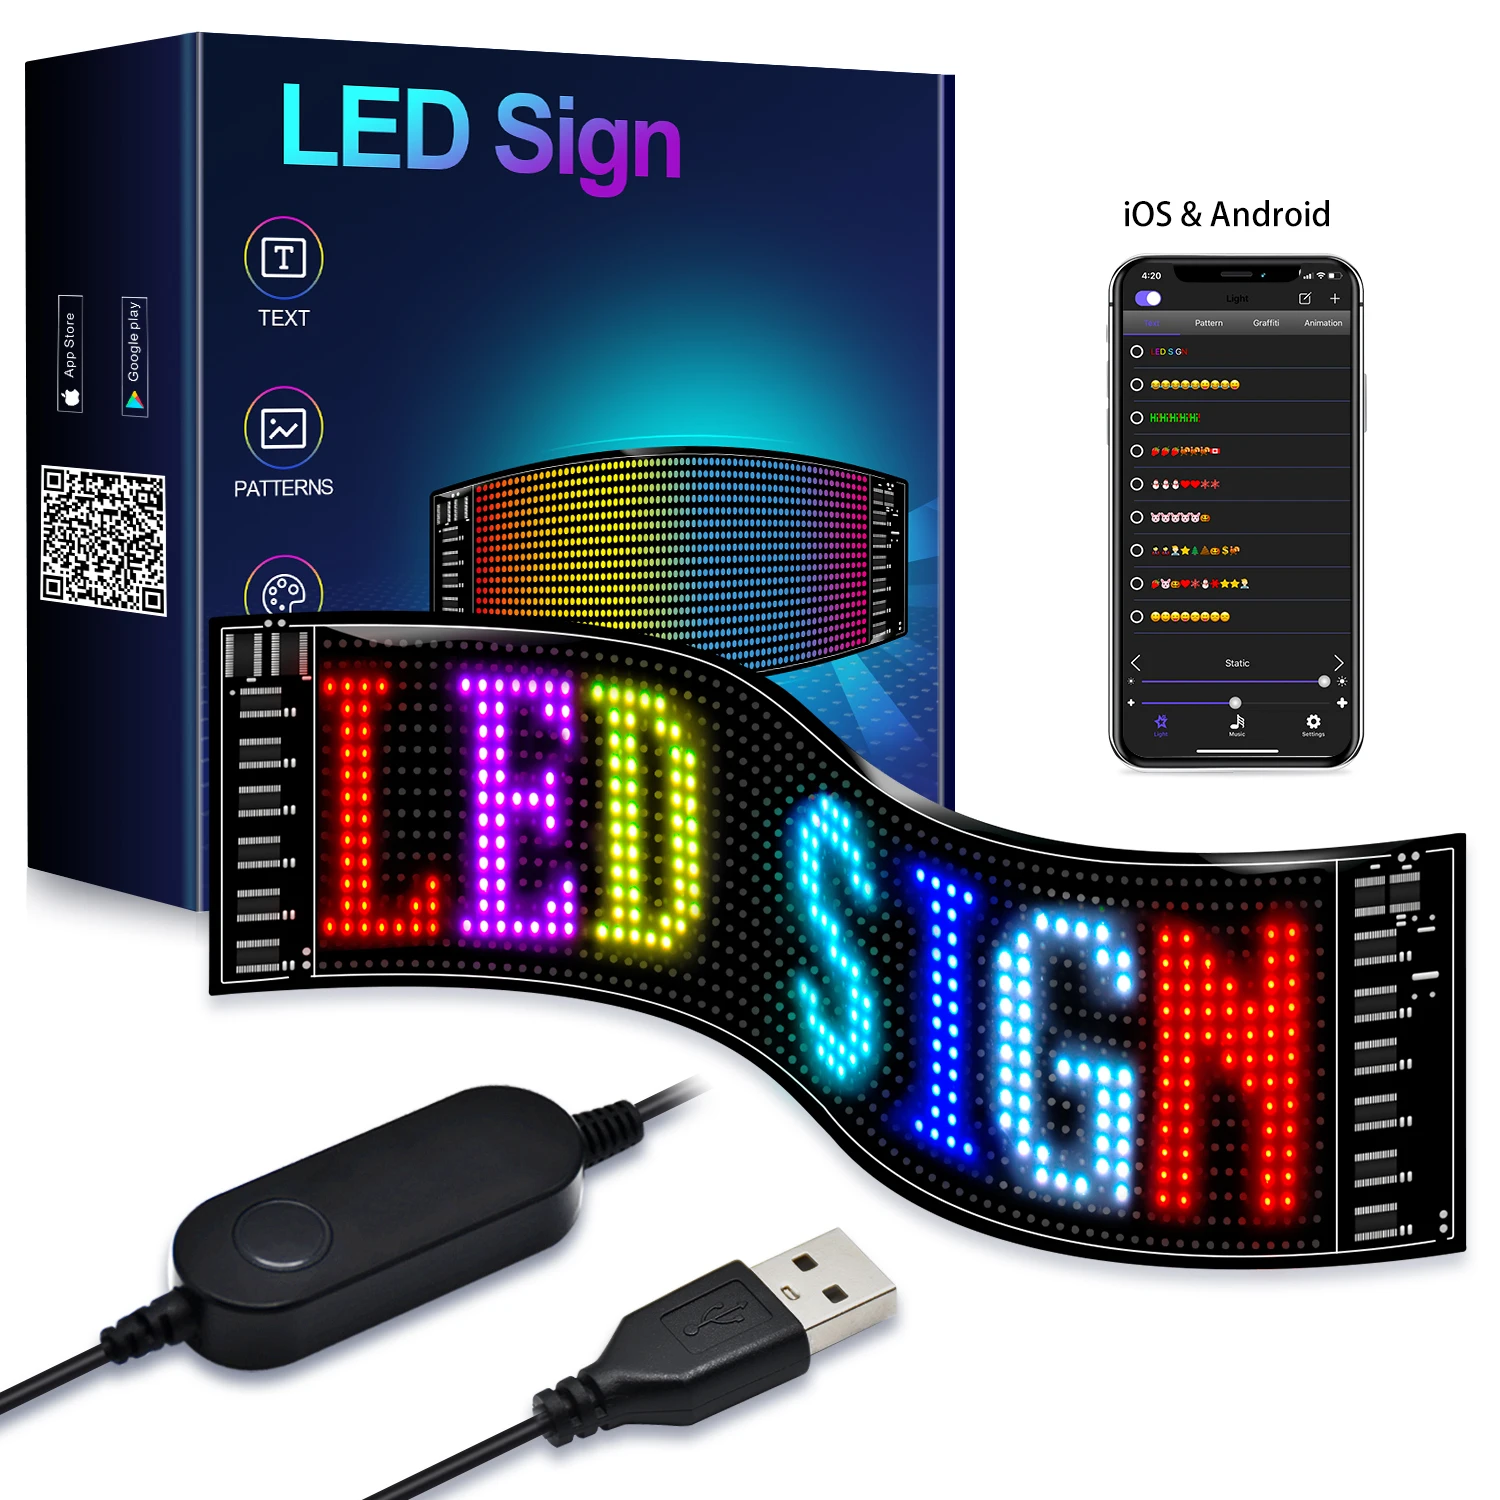 LED Matrix Pixel Panel, Scrolling Bright Advertising LED Signs, Flexible USB 5V LED Car Sign Bluetooth App Control For Car, Shop